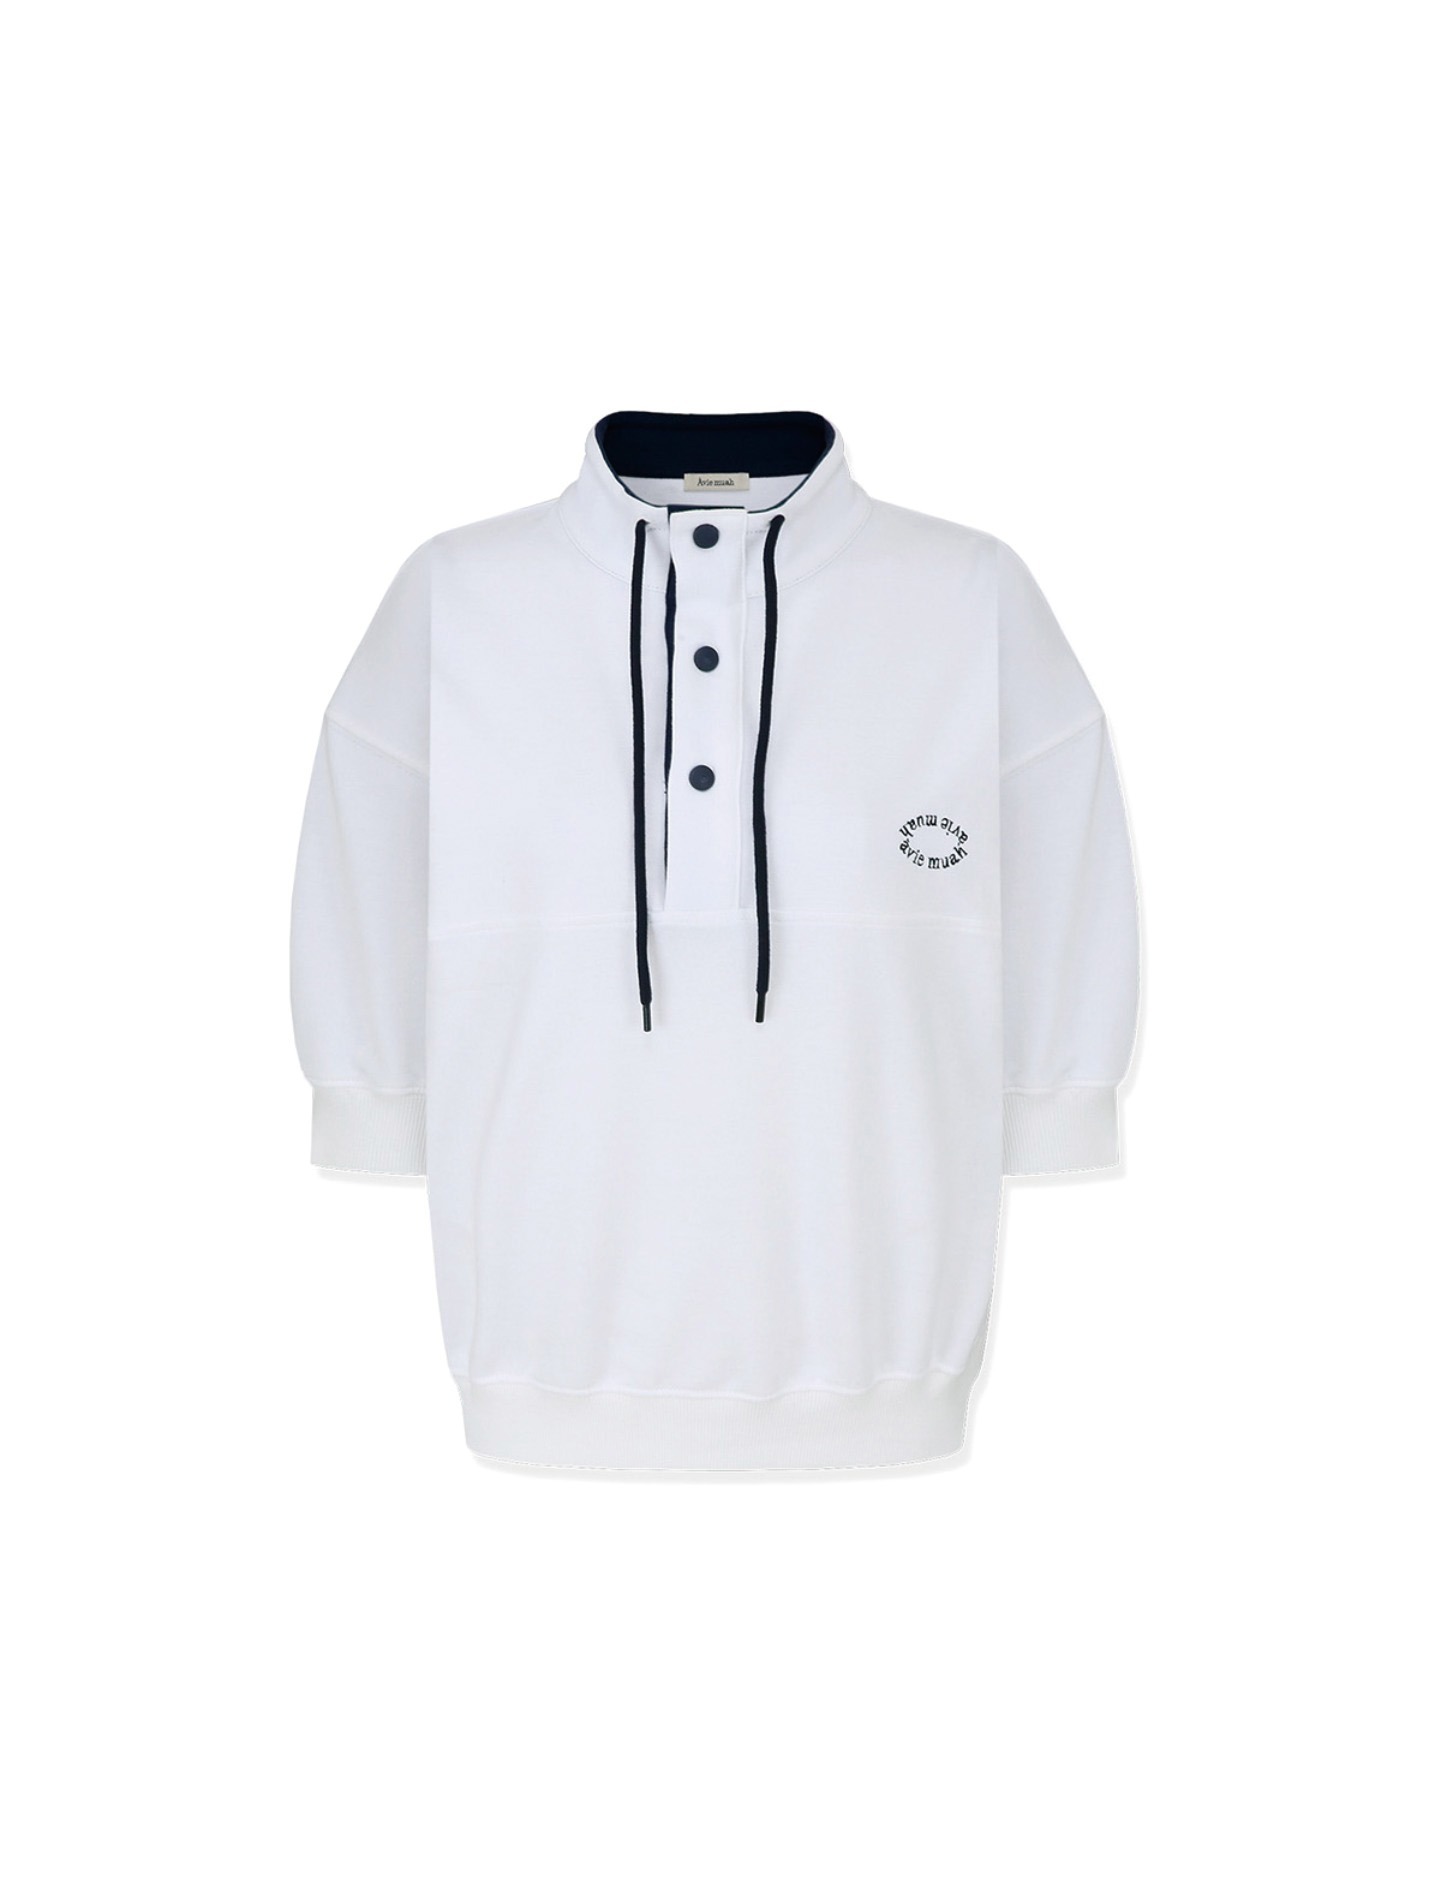 Snap-Button Sweatshirt (White)